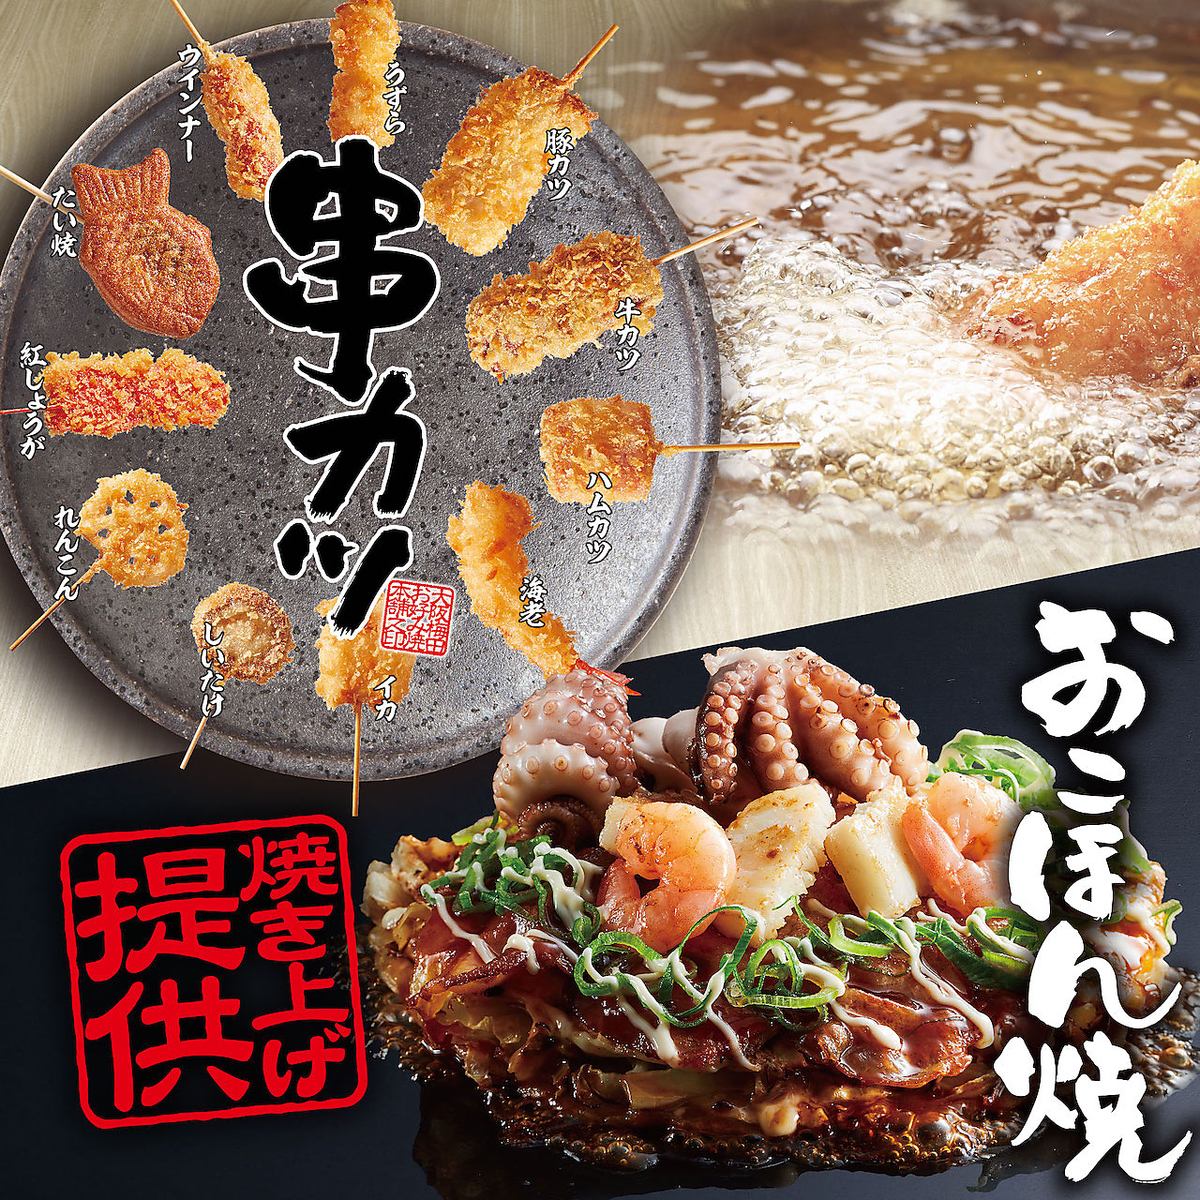 All-you-can-eat freshly baked okonomiyaki and freshly fried kushikatsu!